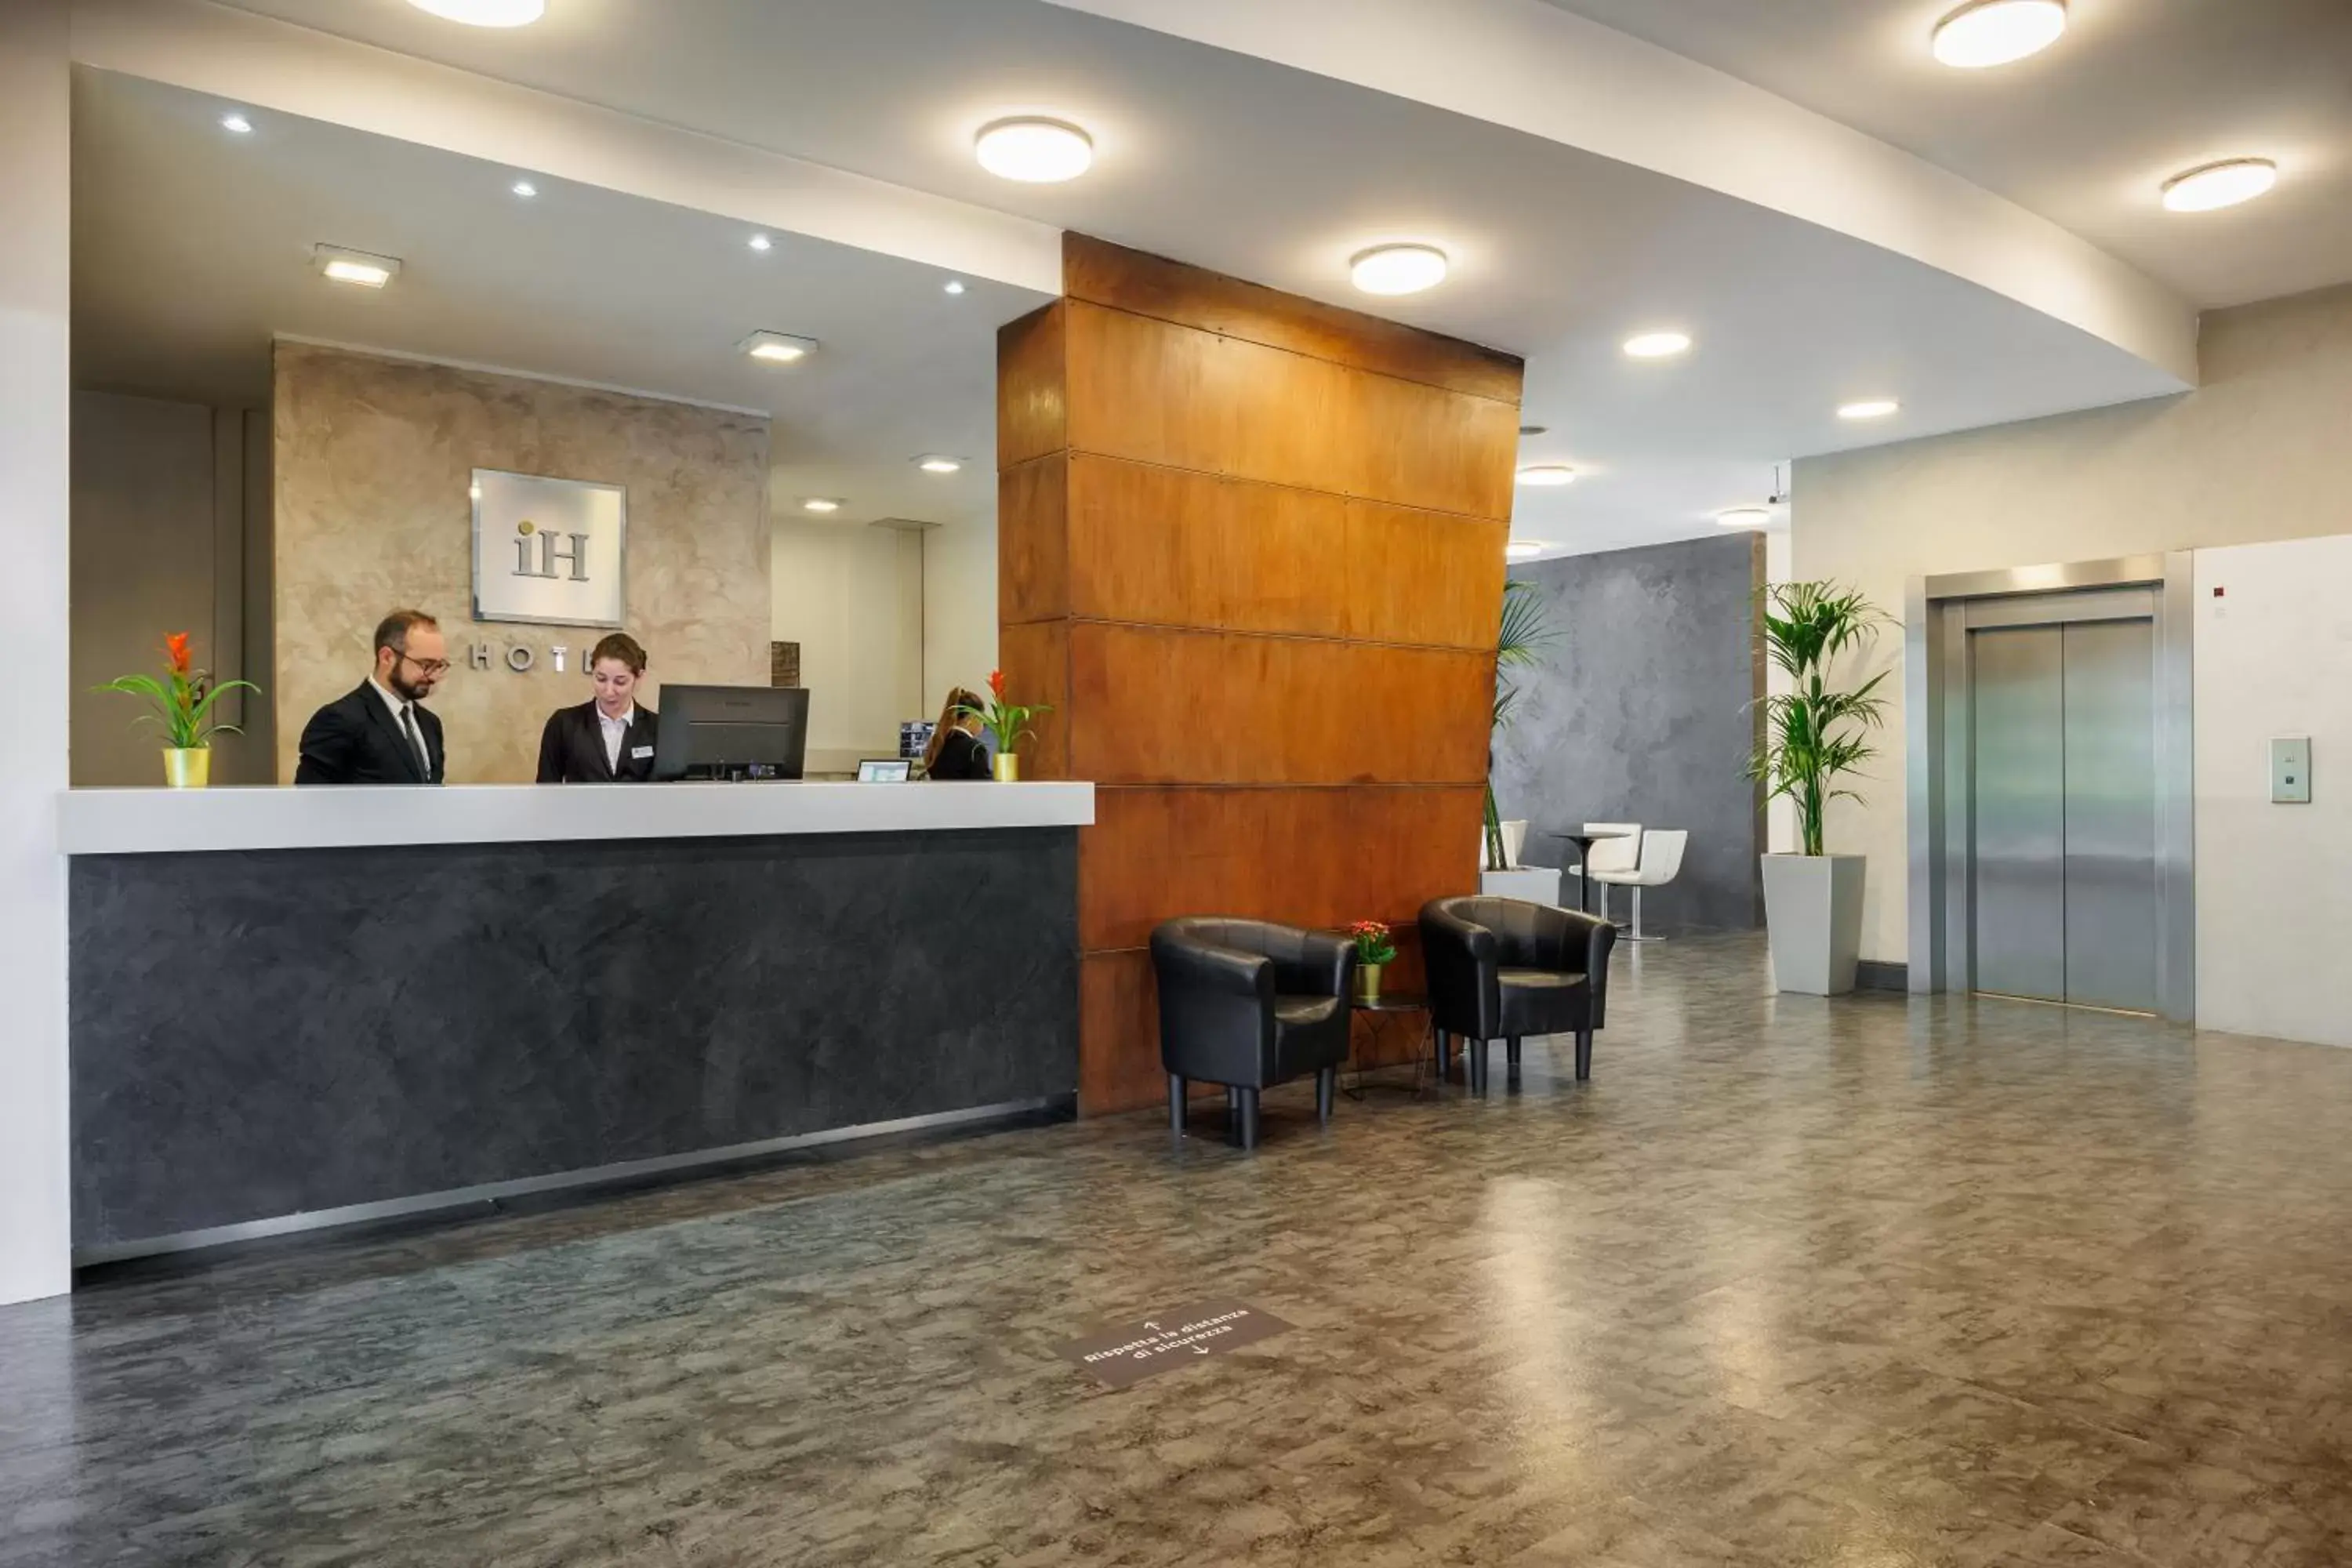 Lobby or reception, Lobby/Reception in iH Hotels Milano Lorenteggio